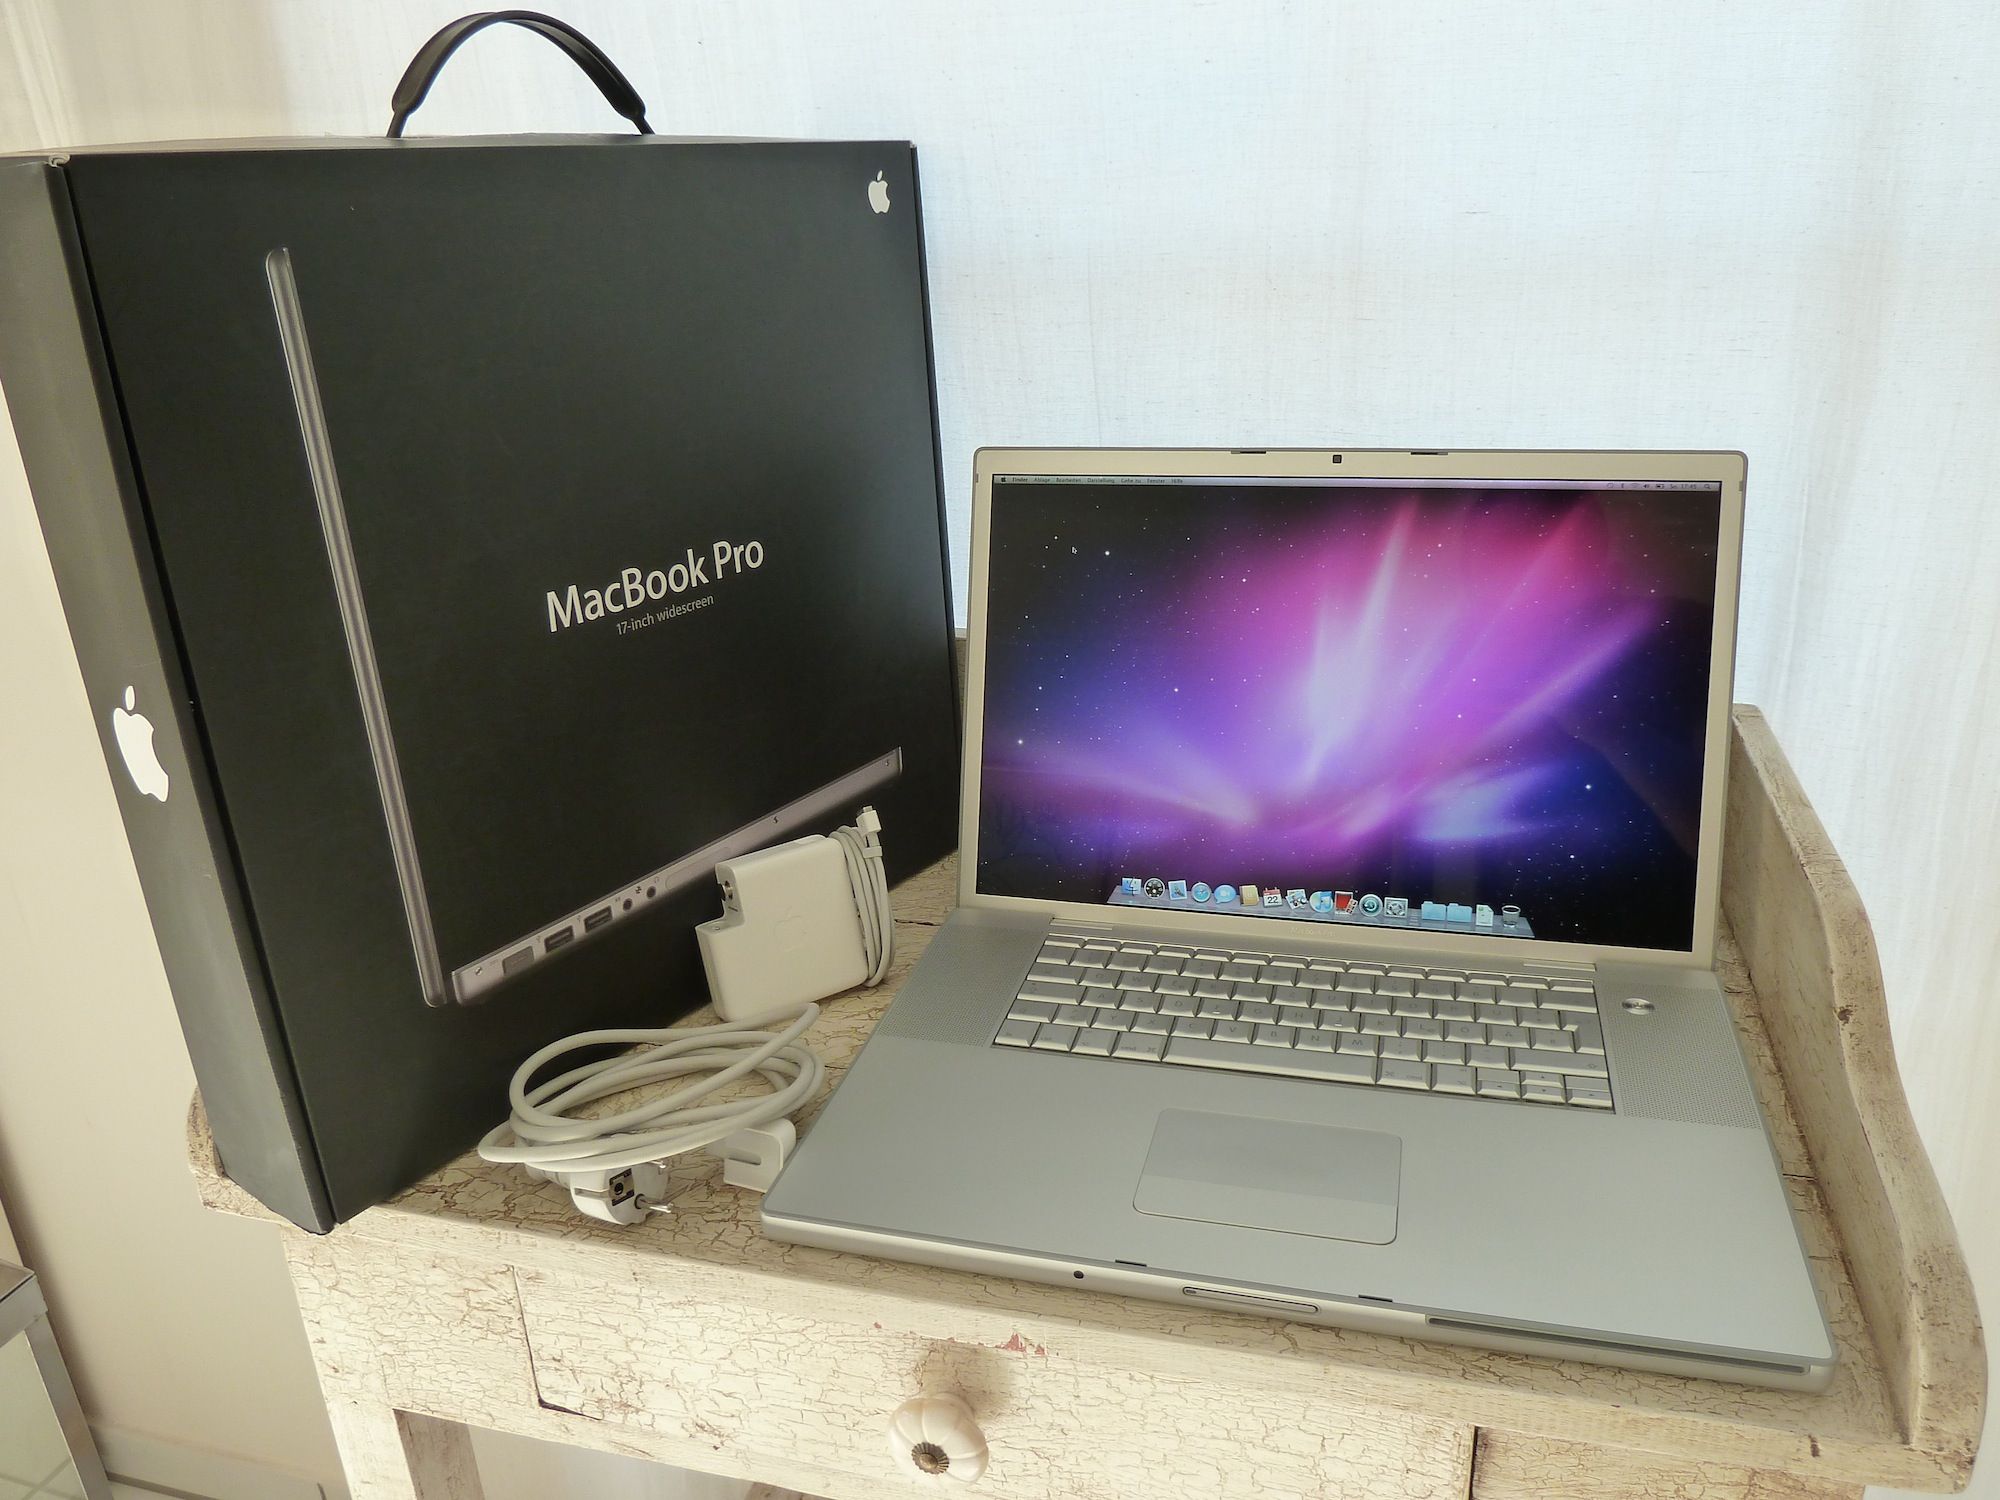 Apple MacBook Pro 17 Intel Core 2 Duo 2,6GHz 4GB 750GB OVP glossy